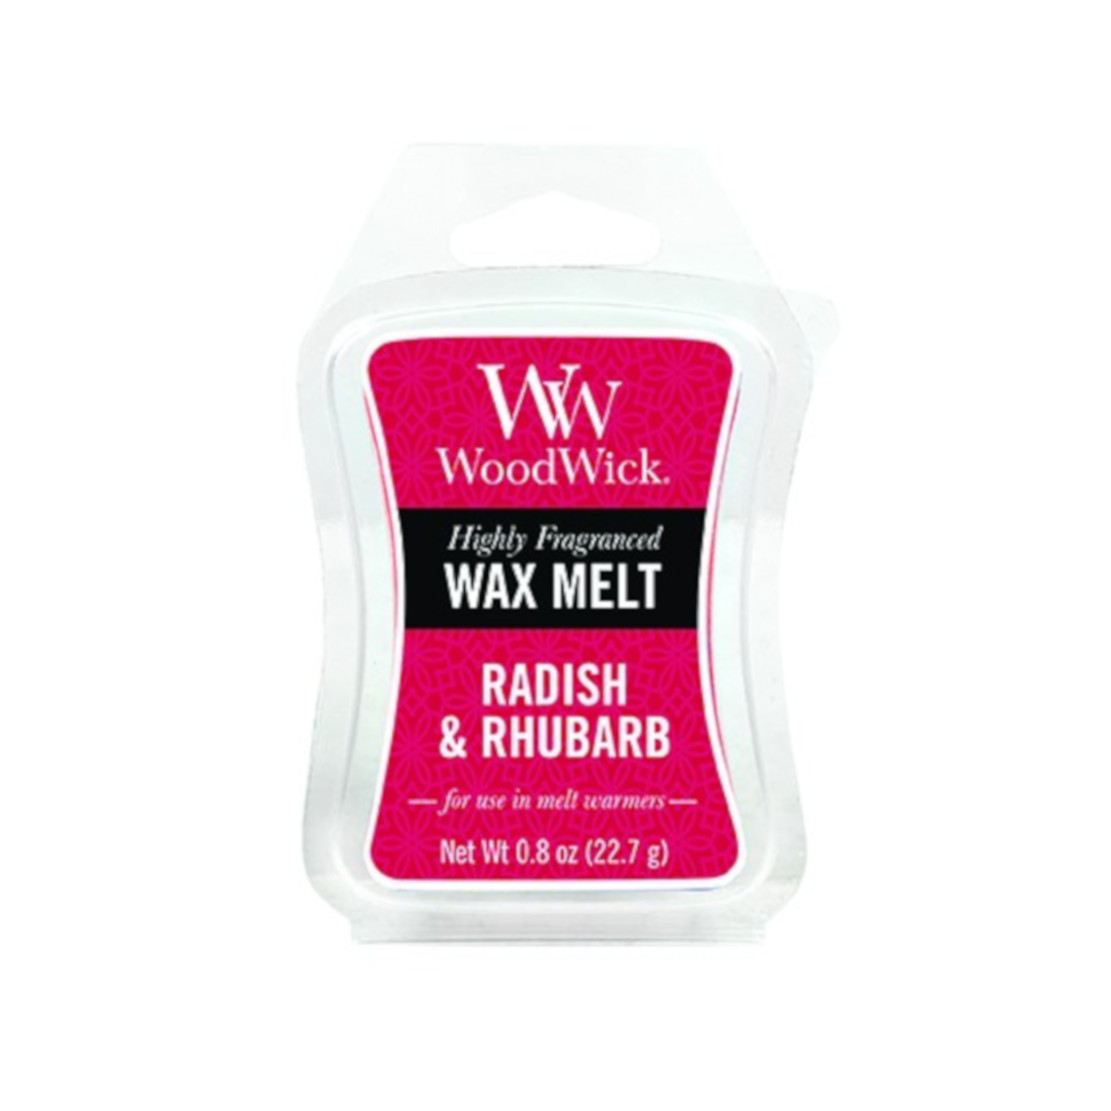 Woodwick Radish And Rhubarb Wax Melt